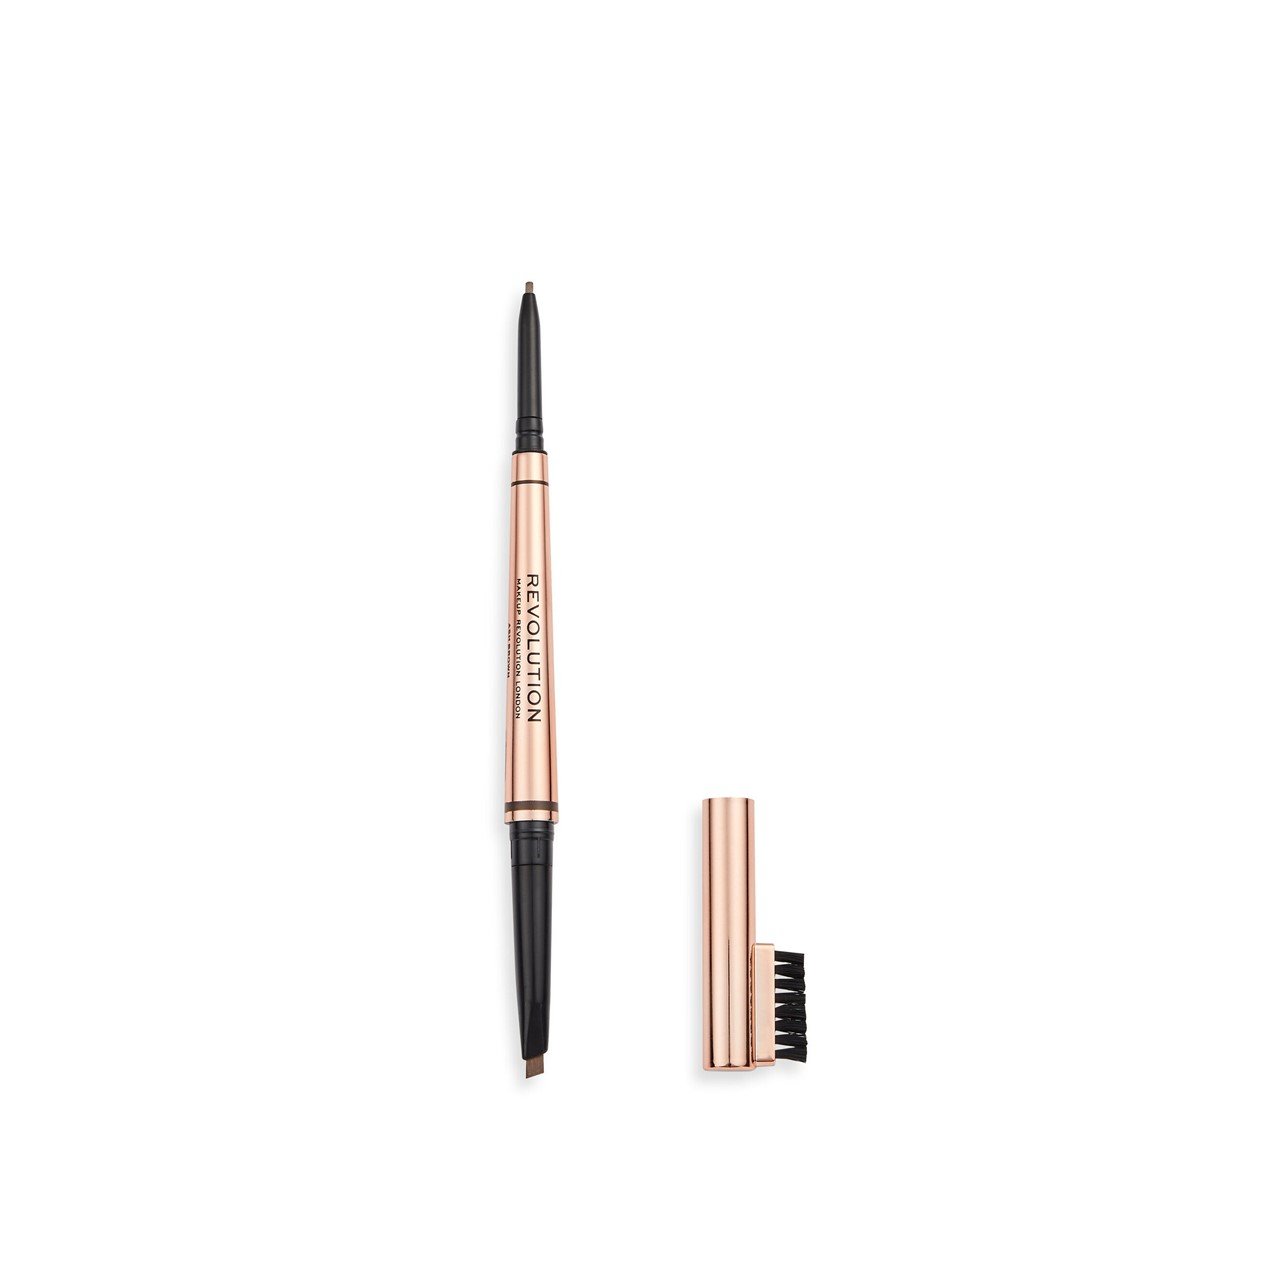 Makeup Revolution Balayage Duo Brow Pencil Ash Brown 0.38g (0.01oz)